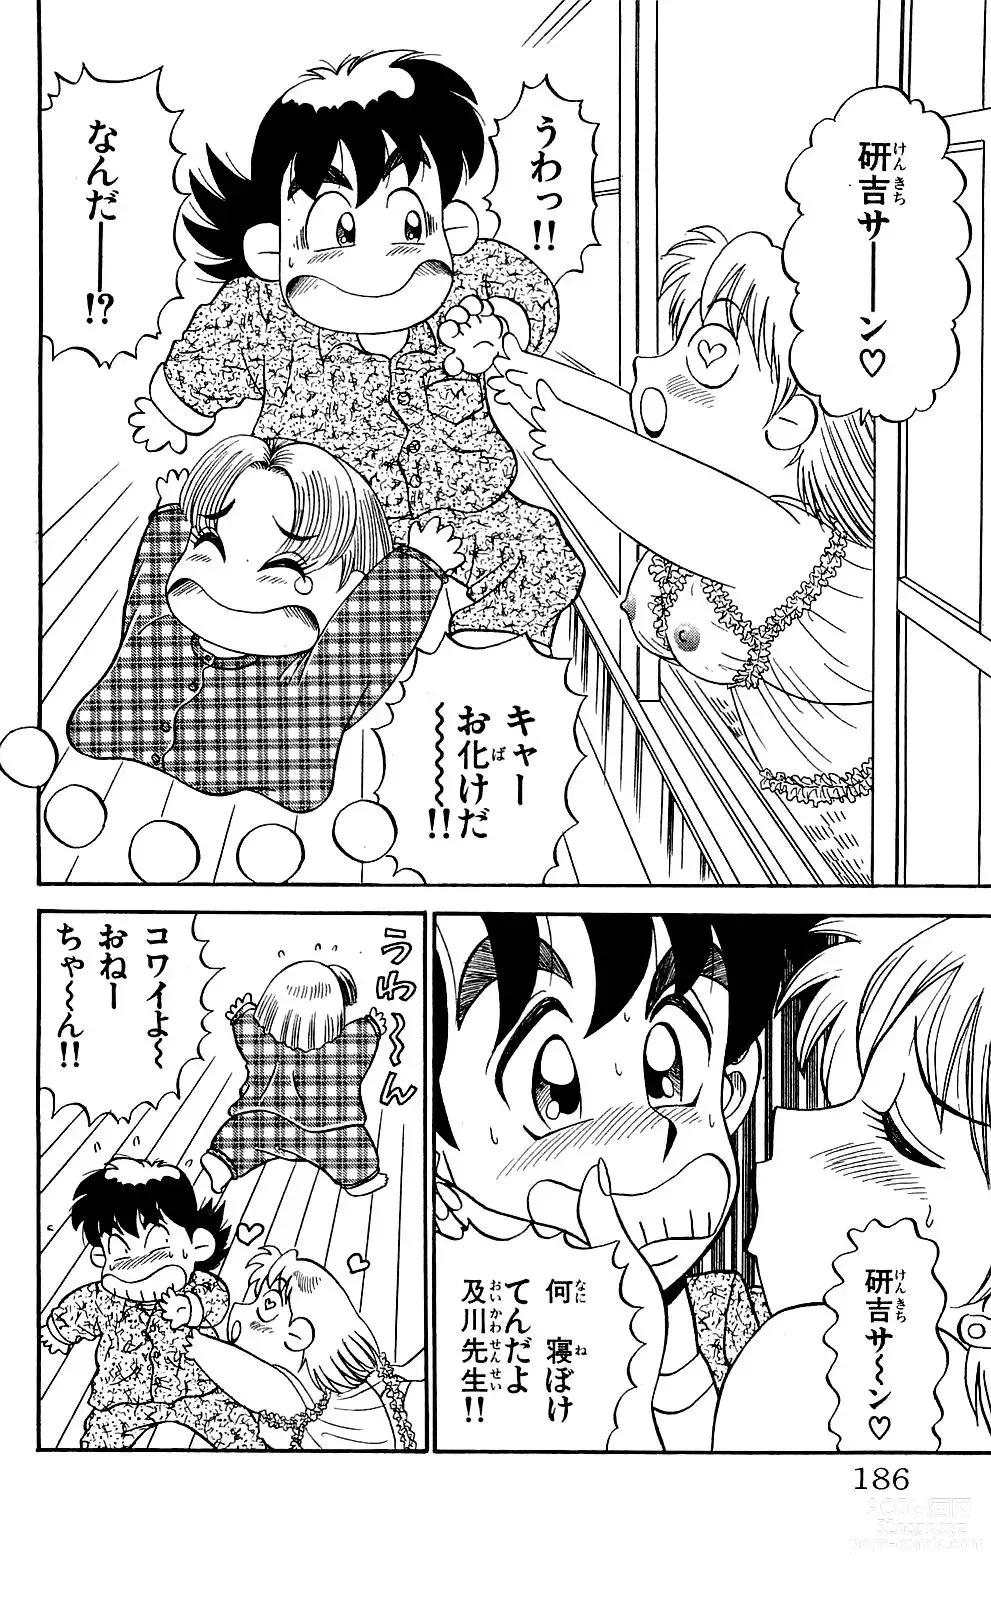 Page 184 of manga Orette Piyoritan Vol. 2